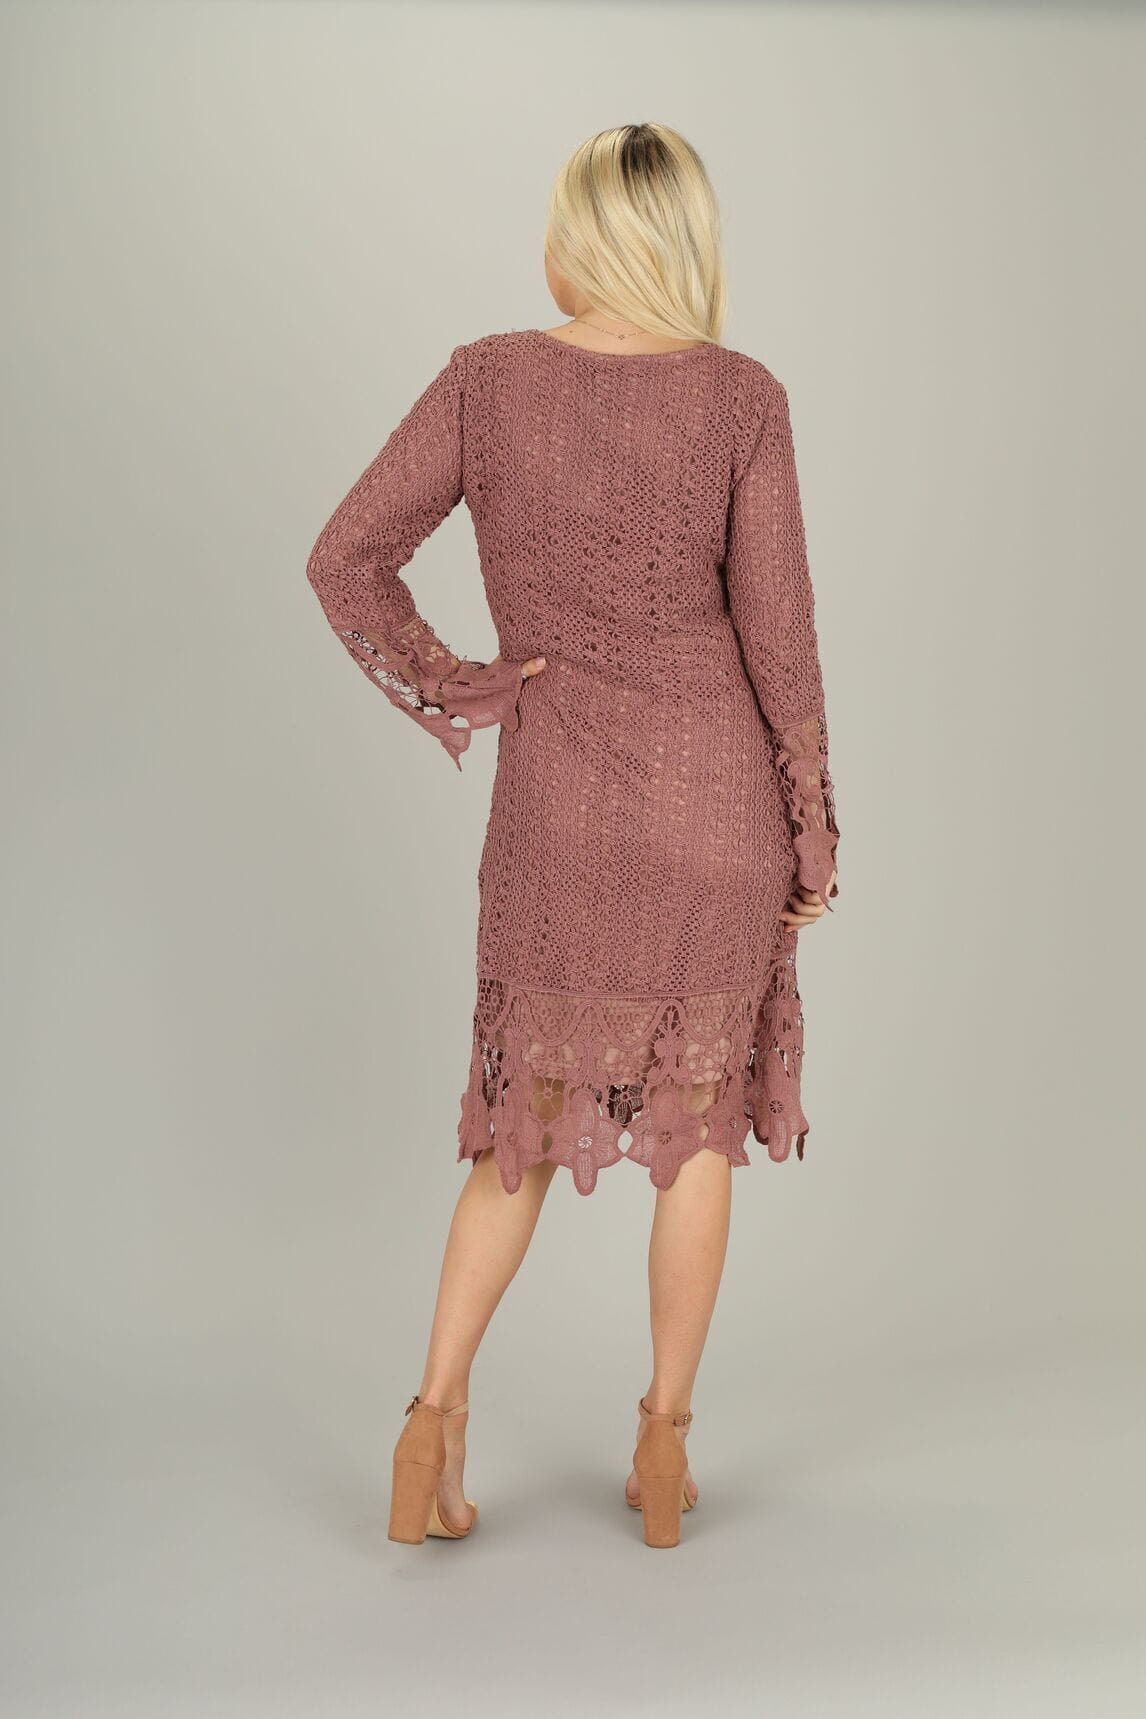 Lydia Crochet Dress in Mauve (Petite length) (FINAL SALE)